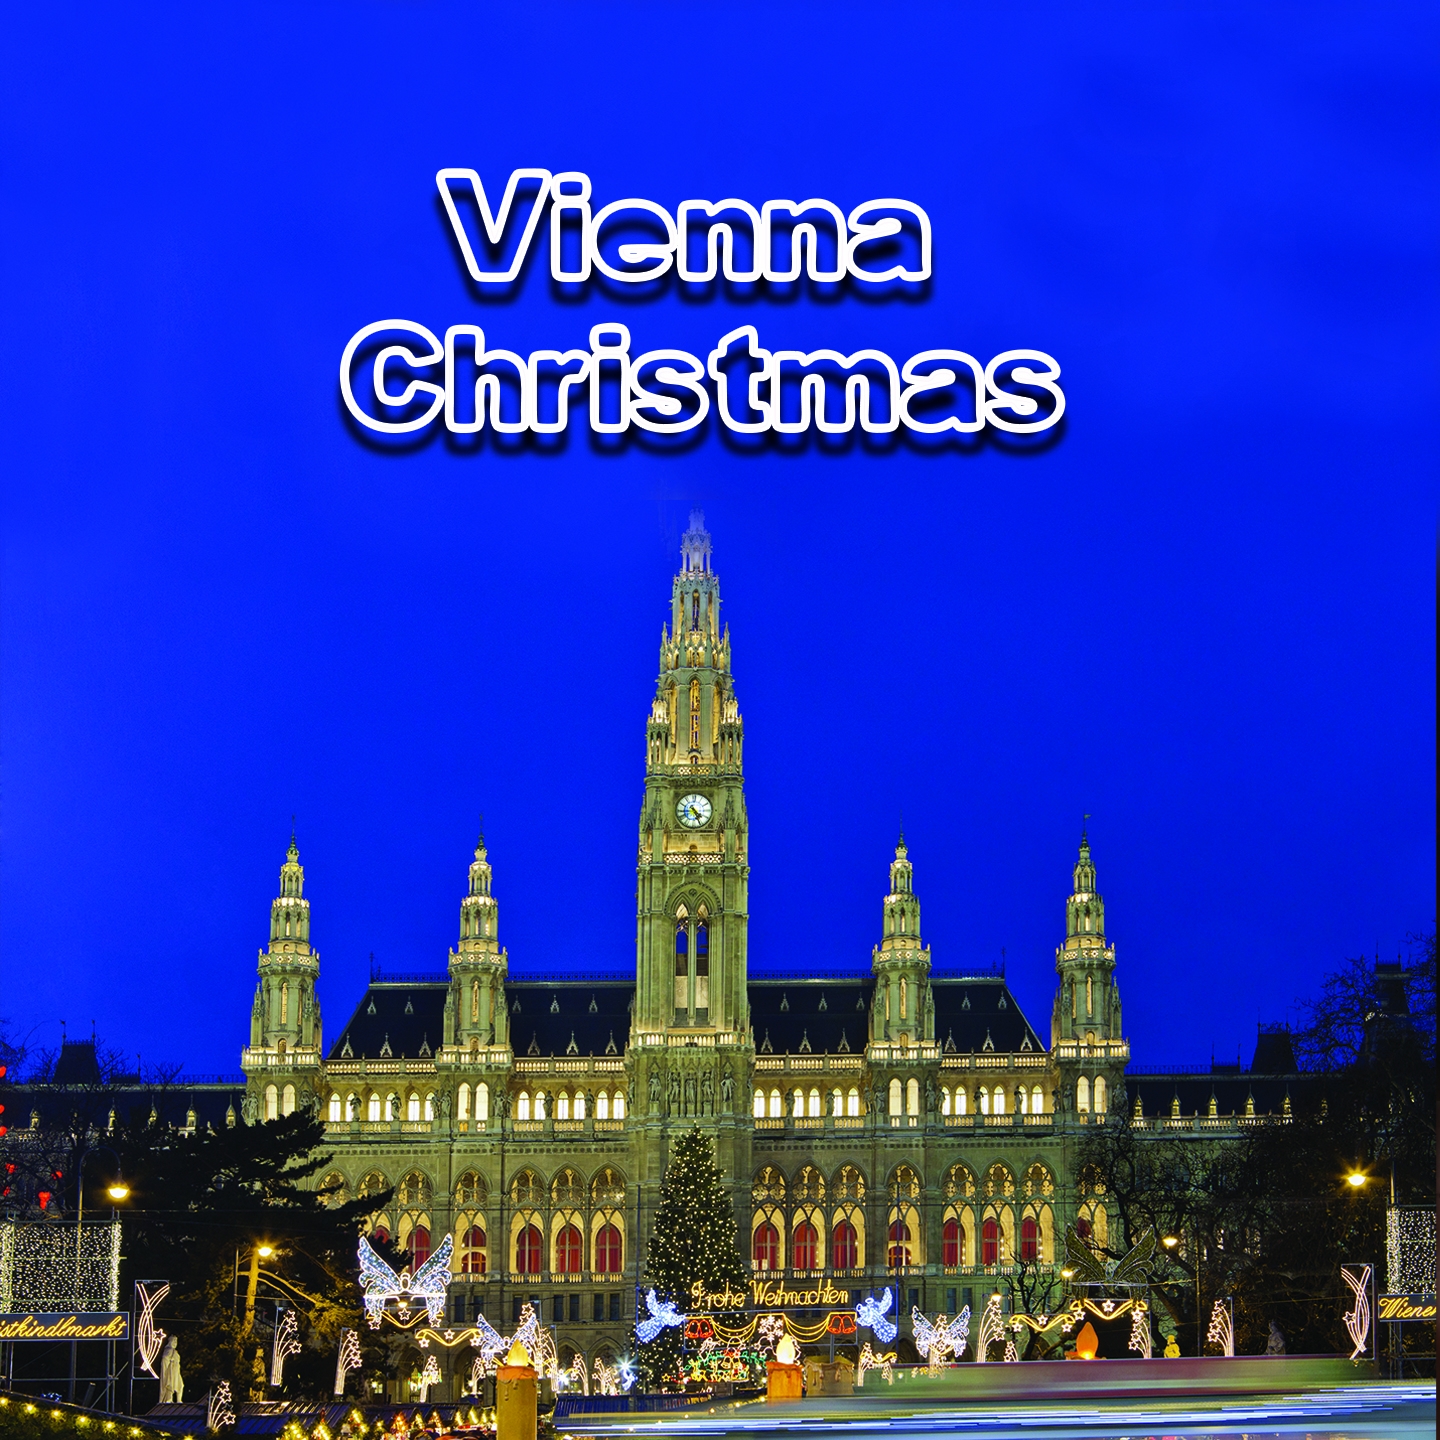 Vienna Christmas (Atmosfere Natalizie)